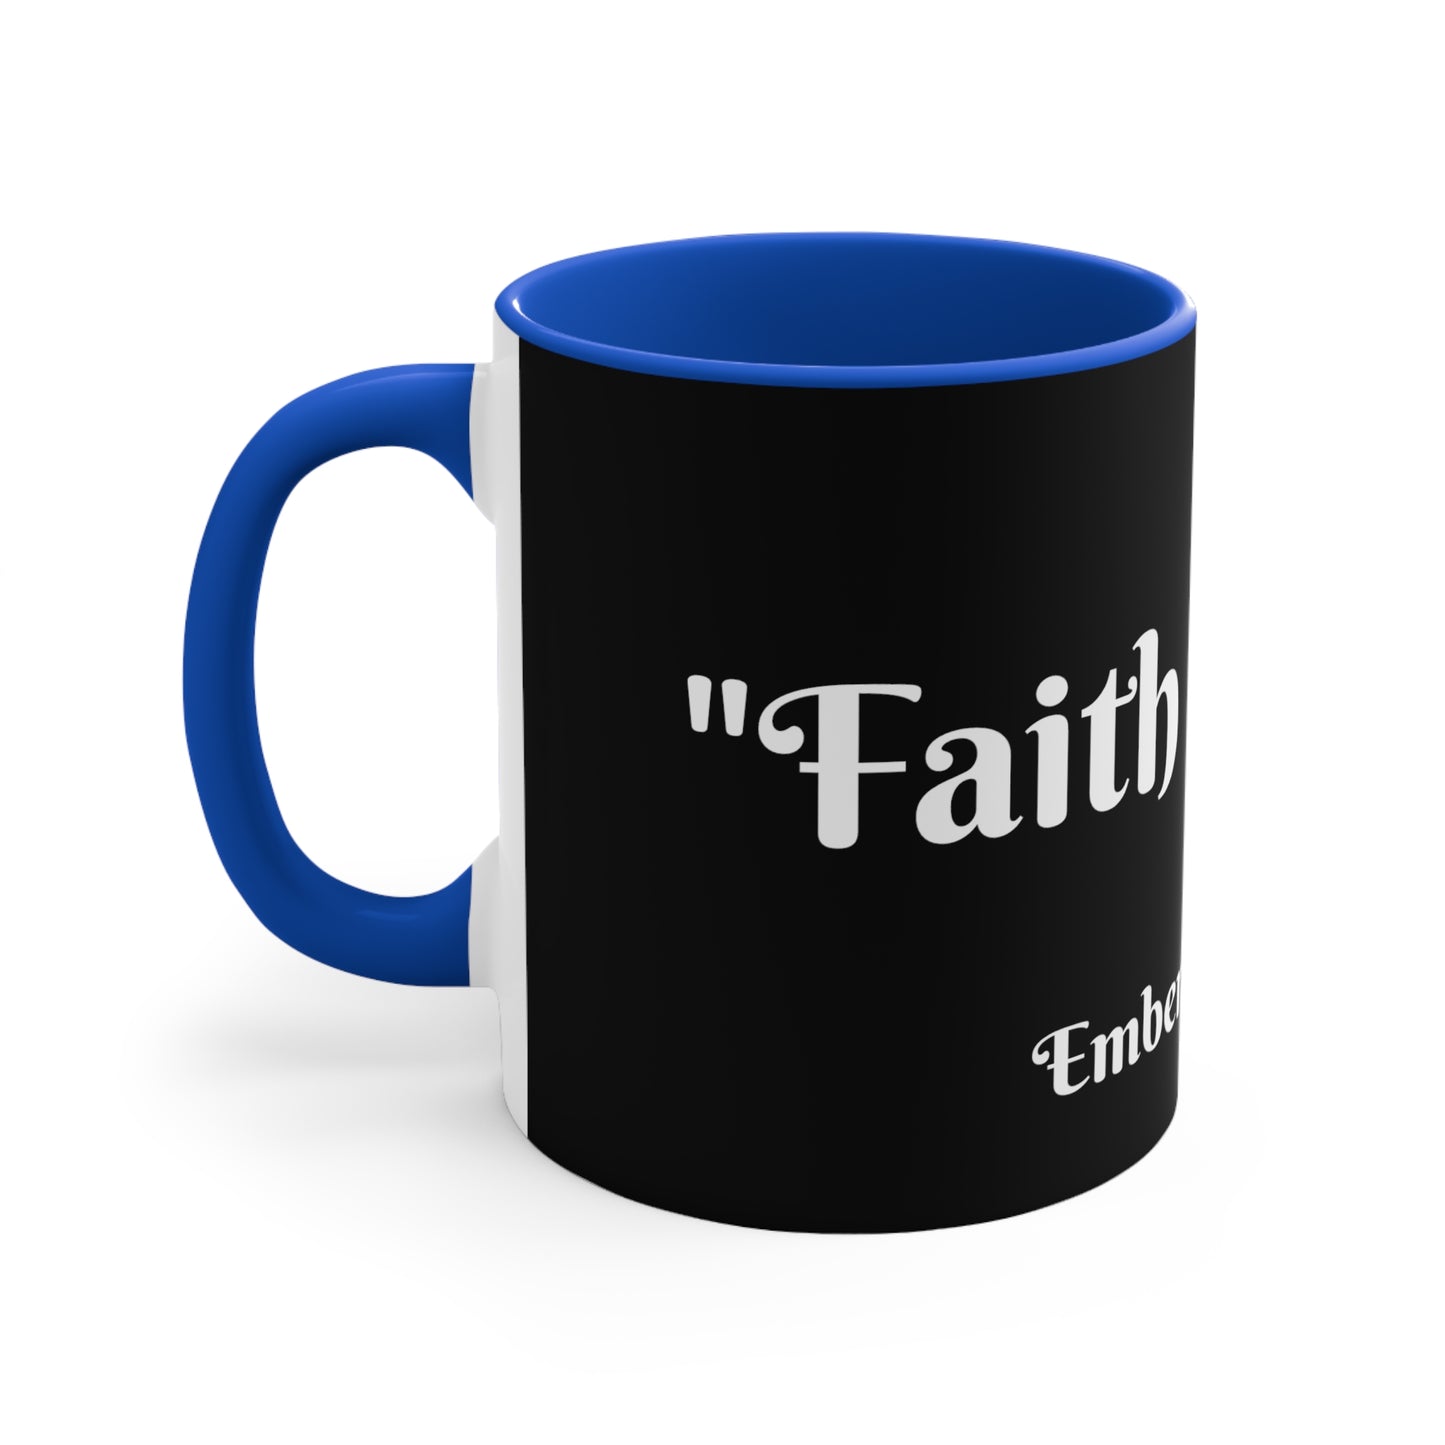 Ember’s Industry Faith n Hope mug